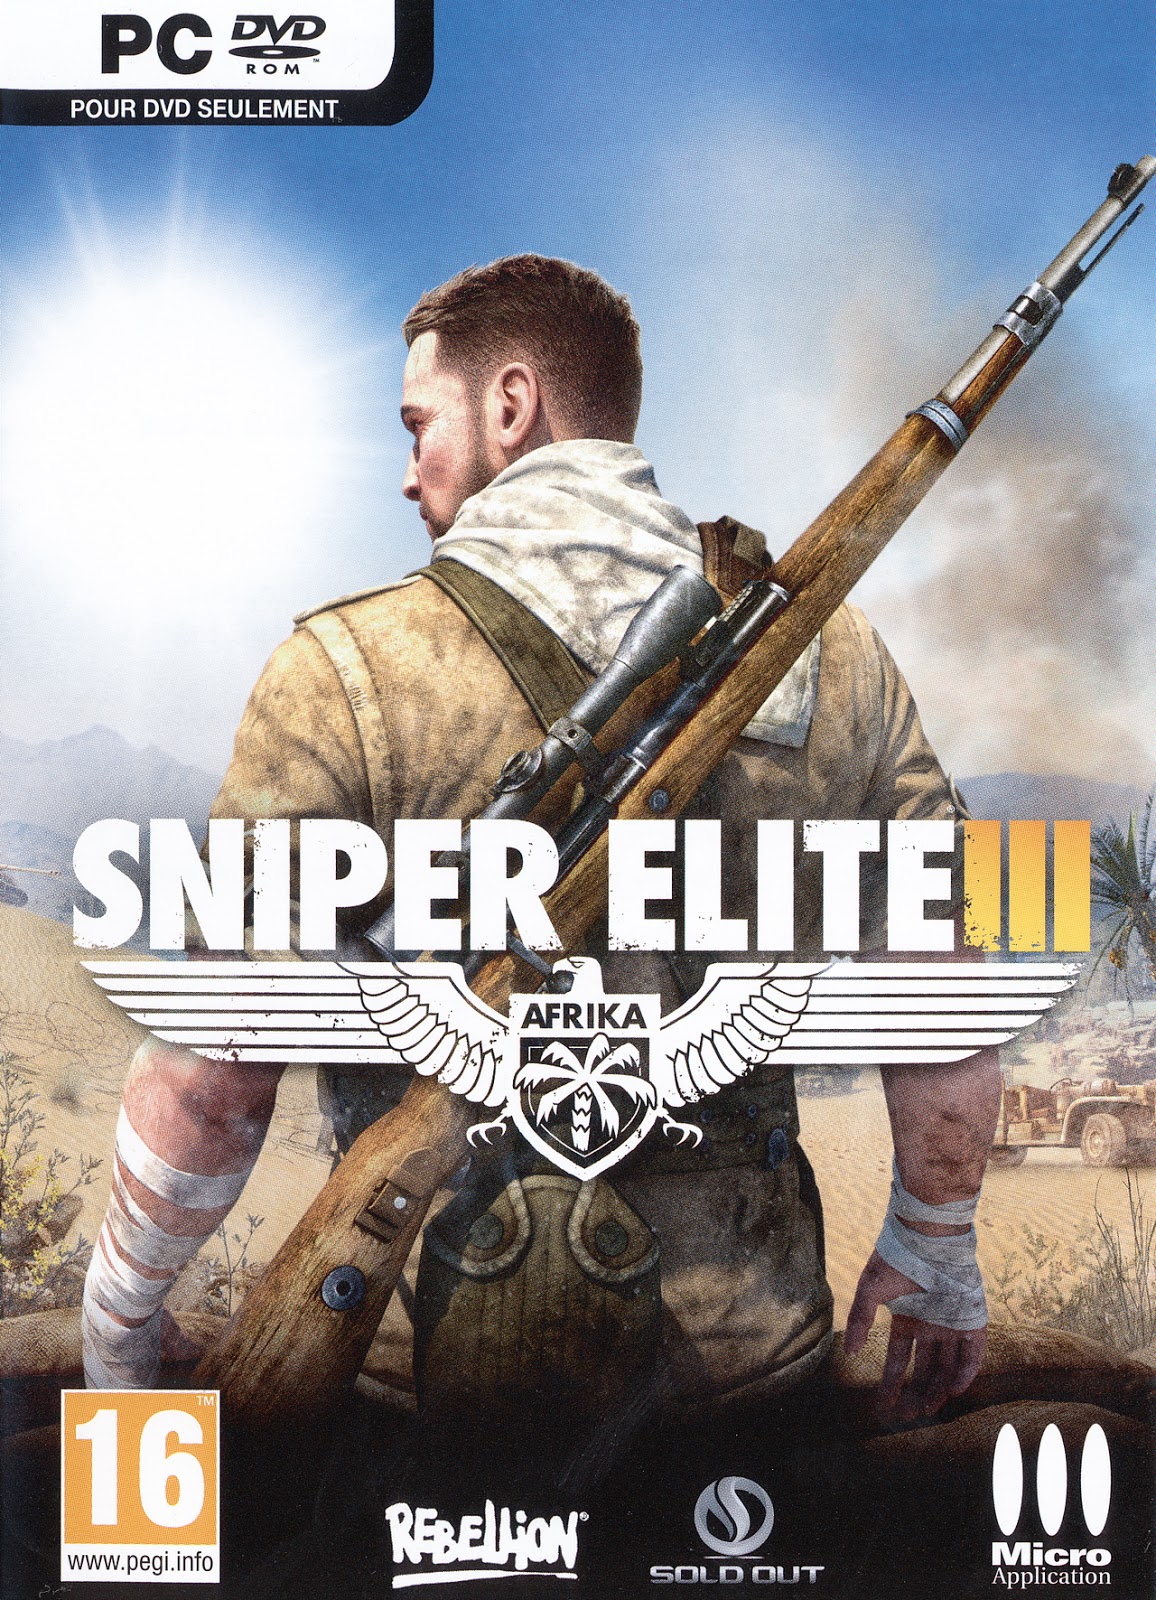 Sniper elite 4 pc download